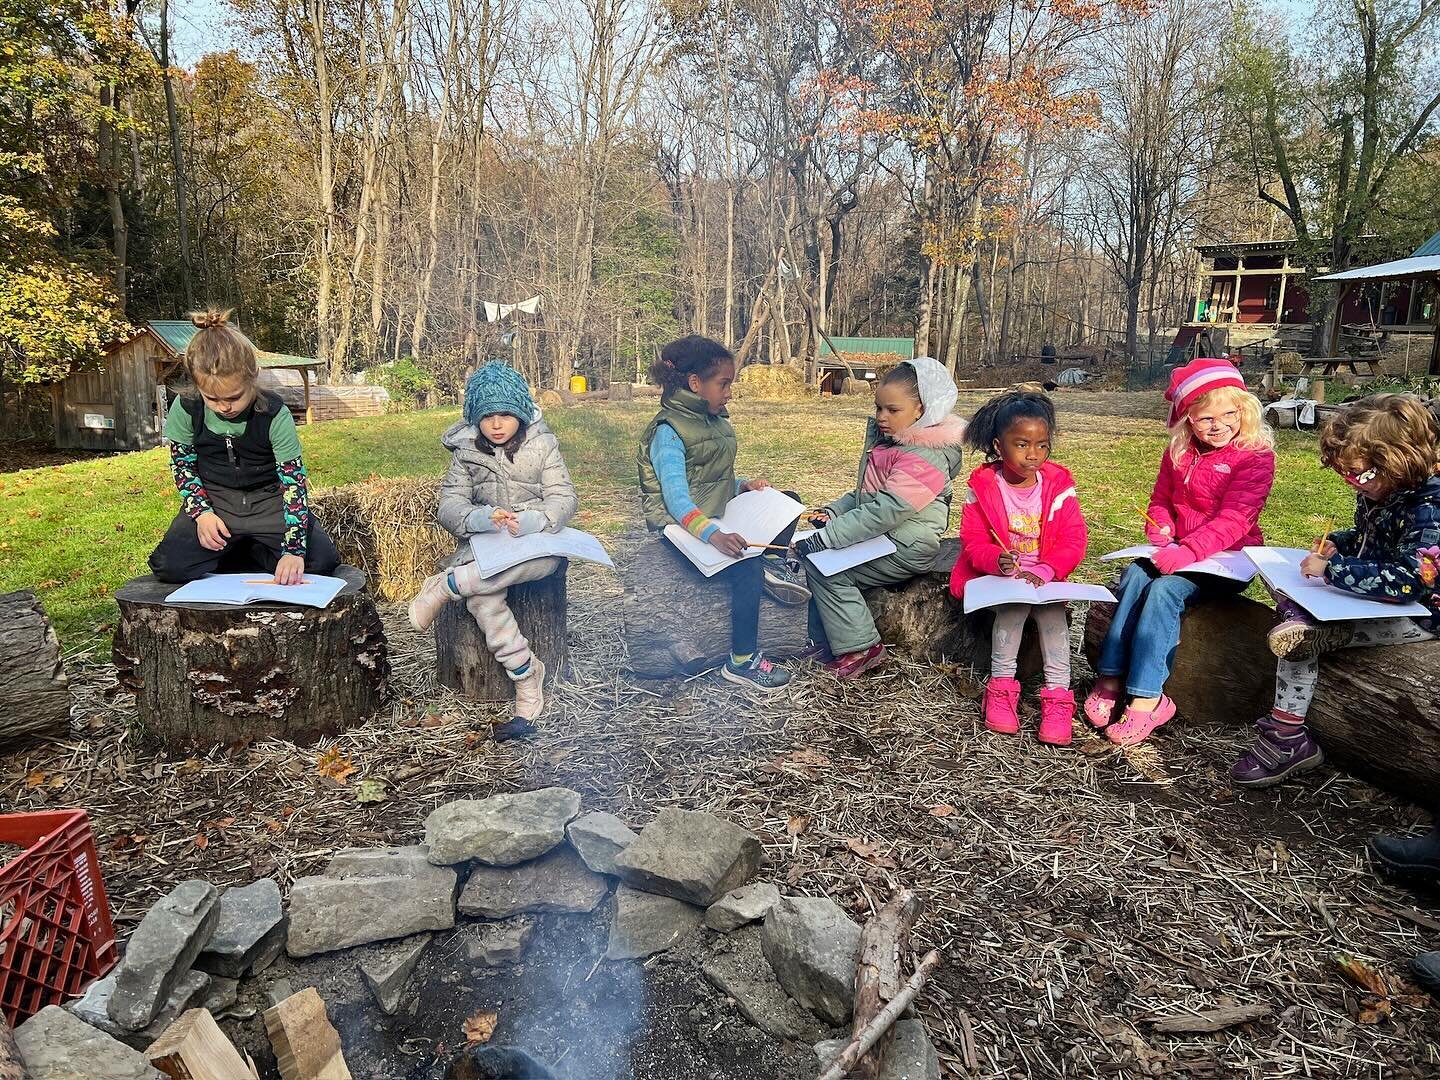 Morning journaling in the outdoor classroom

#OutdoorSchool #OutdoorClassroom #NatureSchool #ForestSchool #NatureSchooling #OptOutside #EcoSchool #InquiryBasedLearning #ExperientialEducation #NatureBasedLearning #ProgressiveEducation #HudsonValley #O